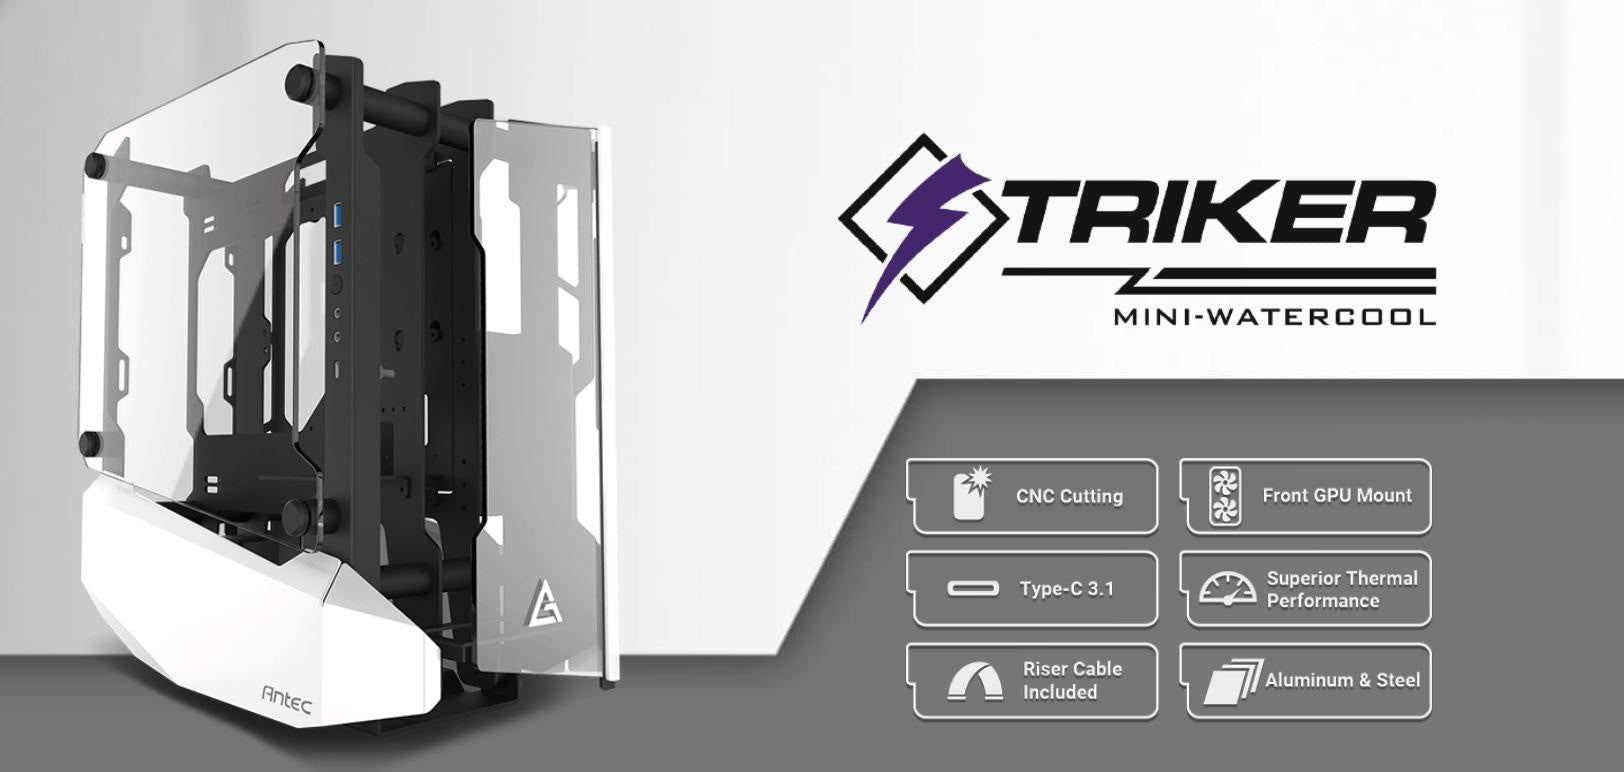 ANTEC STRIKER Open Frame Mini-ITX Aluminium and Steel Case, PCI-E Riser Cable included. USB 3.1 Type-C, Aluminium Steel, Superior Thermal Performance ANTEC